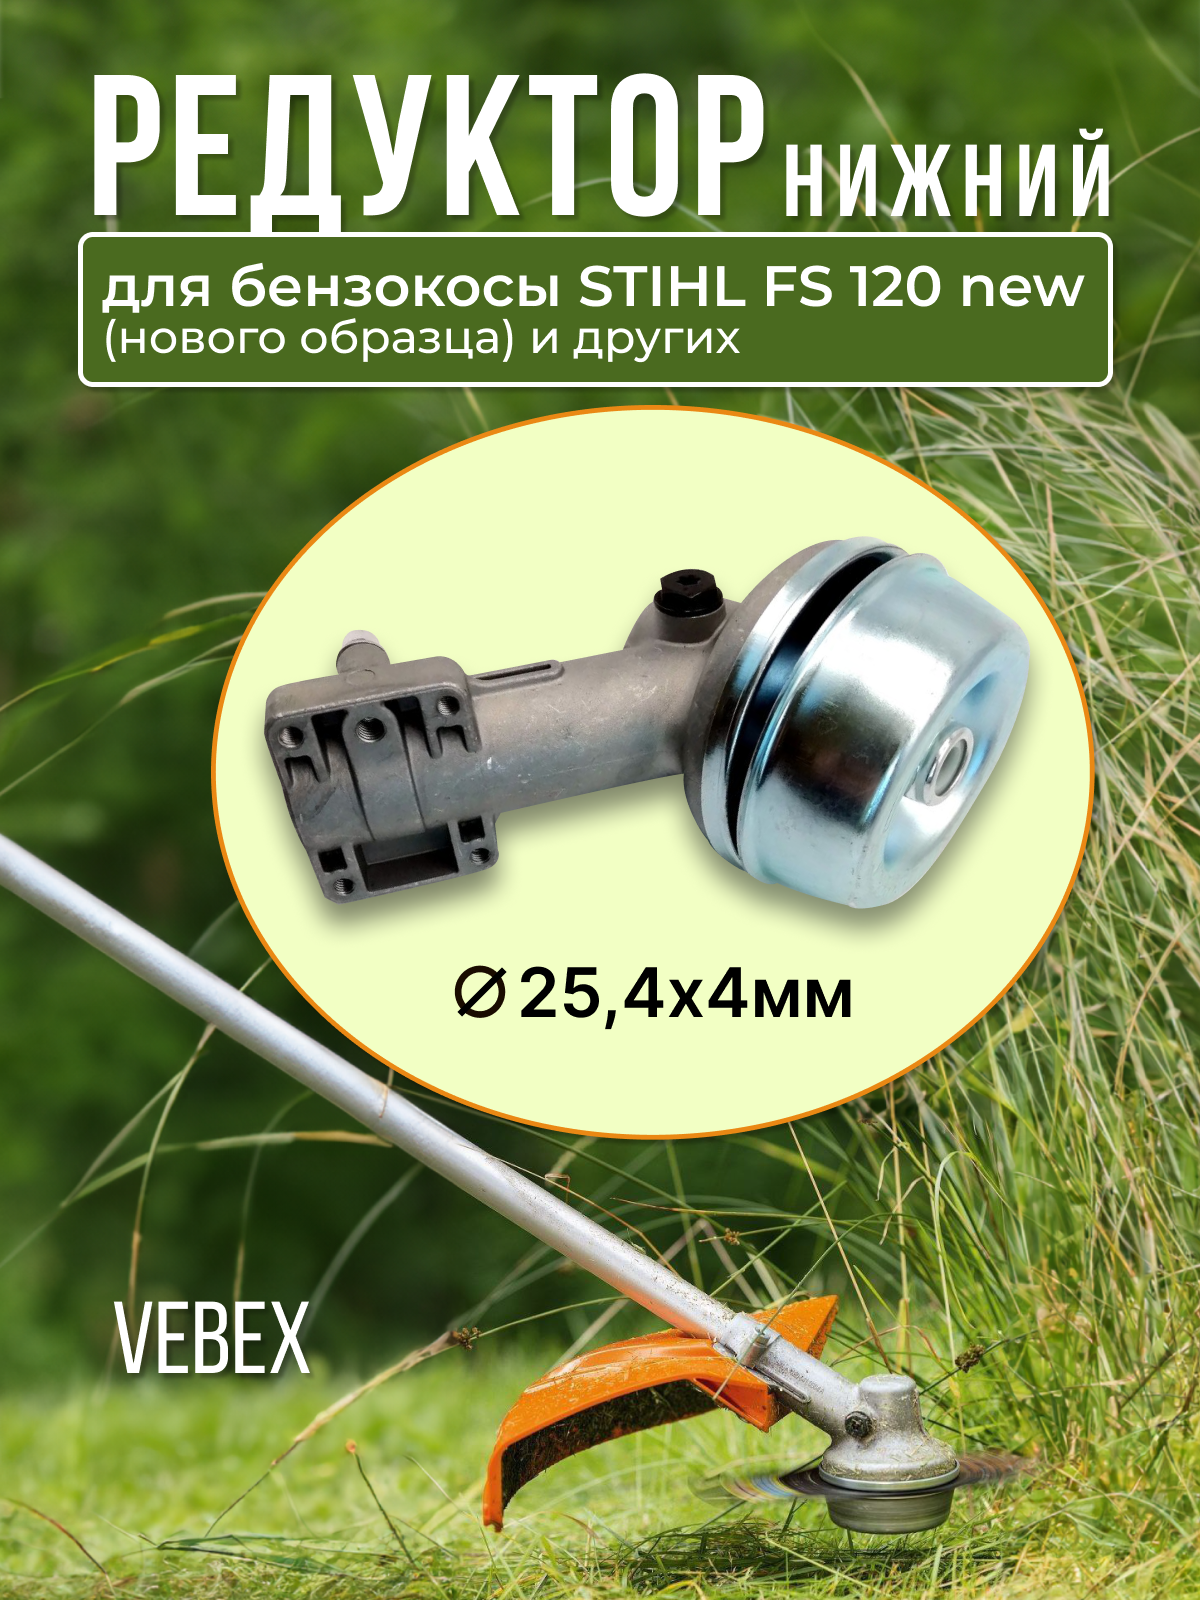 Редуктор Vebex для бензокосы STIHL FS 120 new АГ117675 1шт карбюратор gramadion для stihl fs 120 200 250 нового образца арт 3361